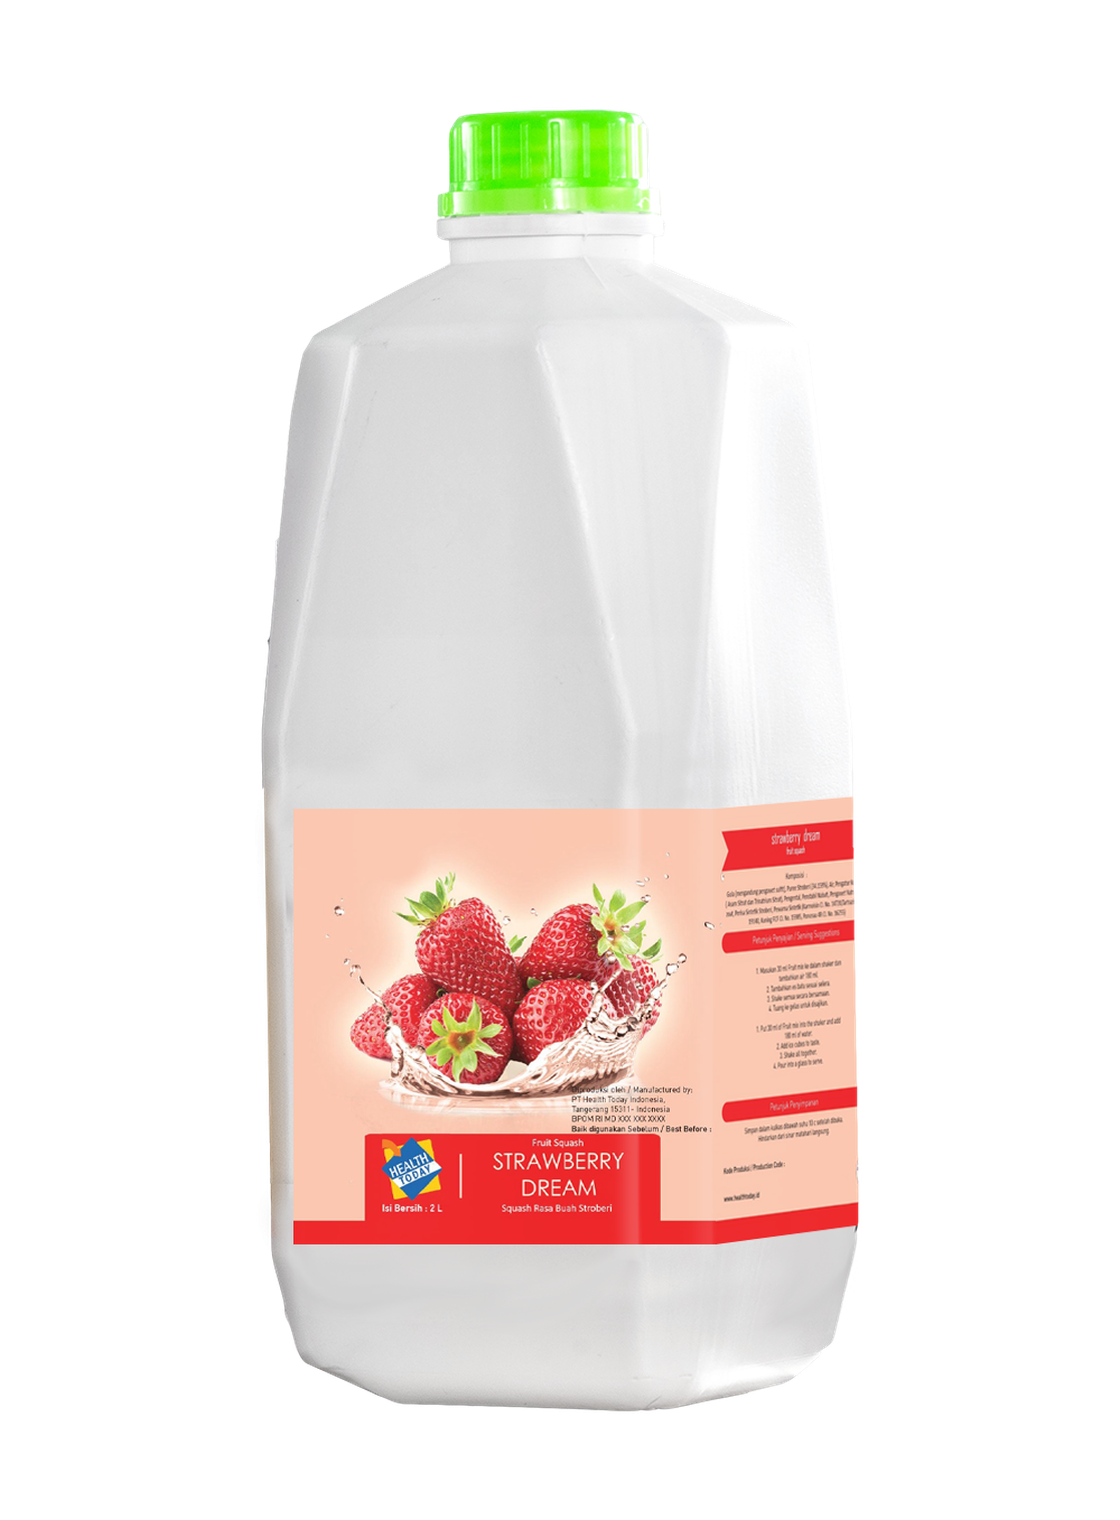 10 ml Health Today Strawberry Dream Fruit Mix